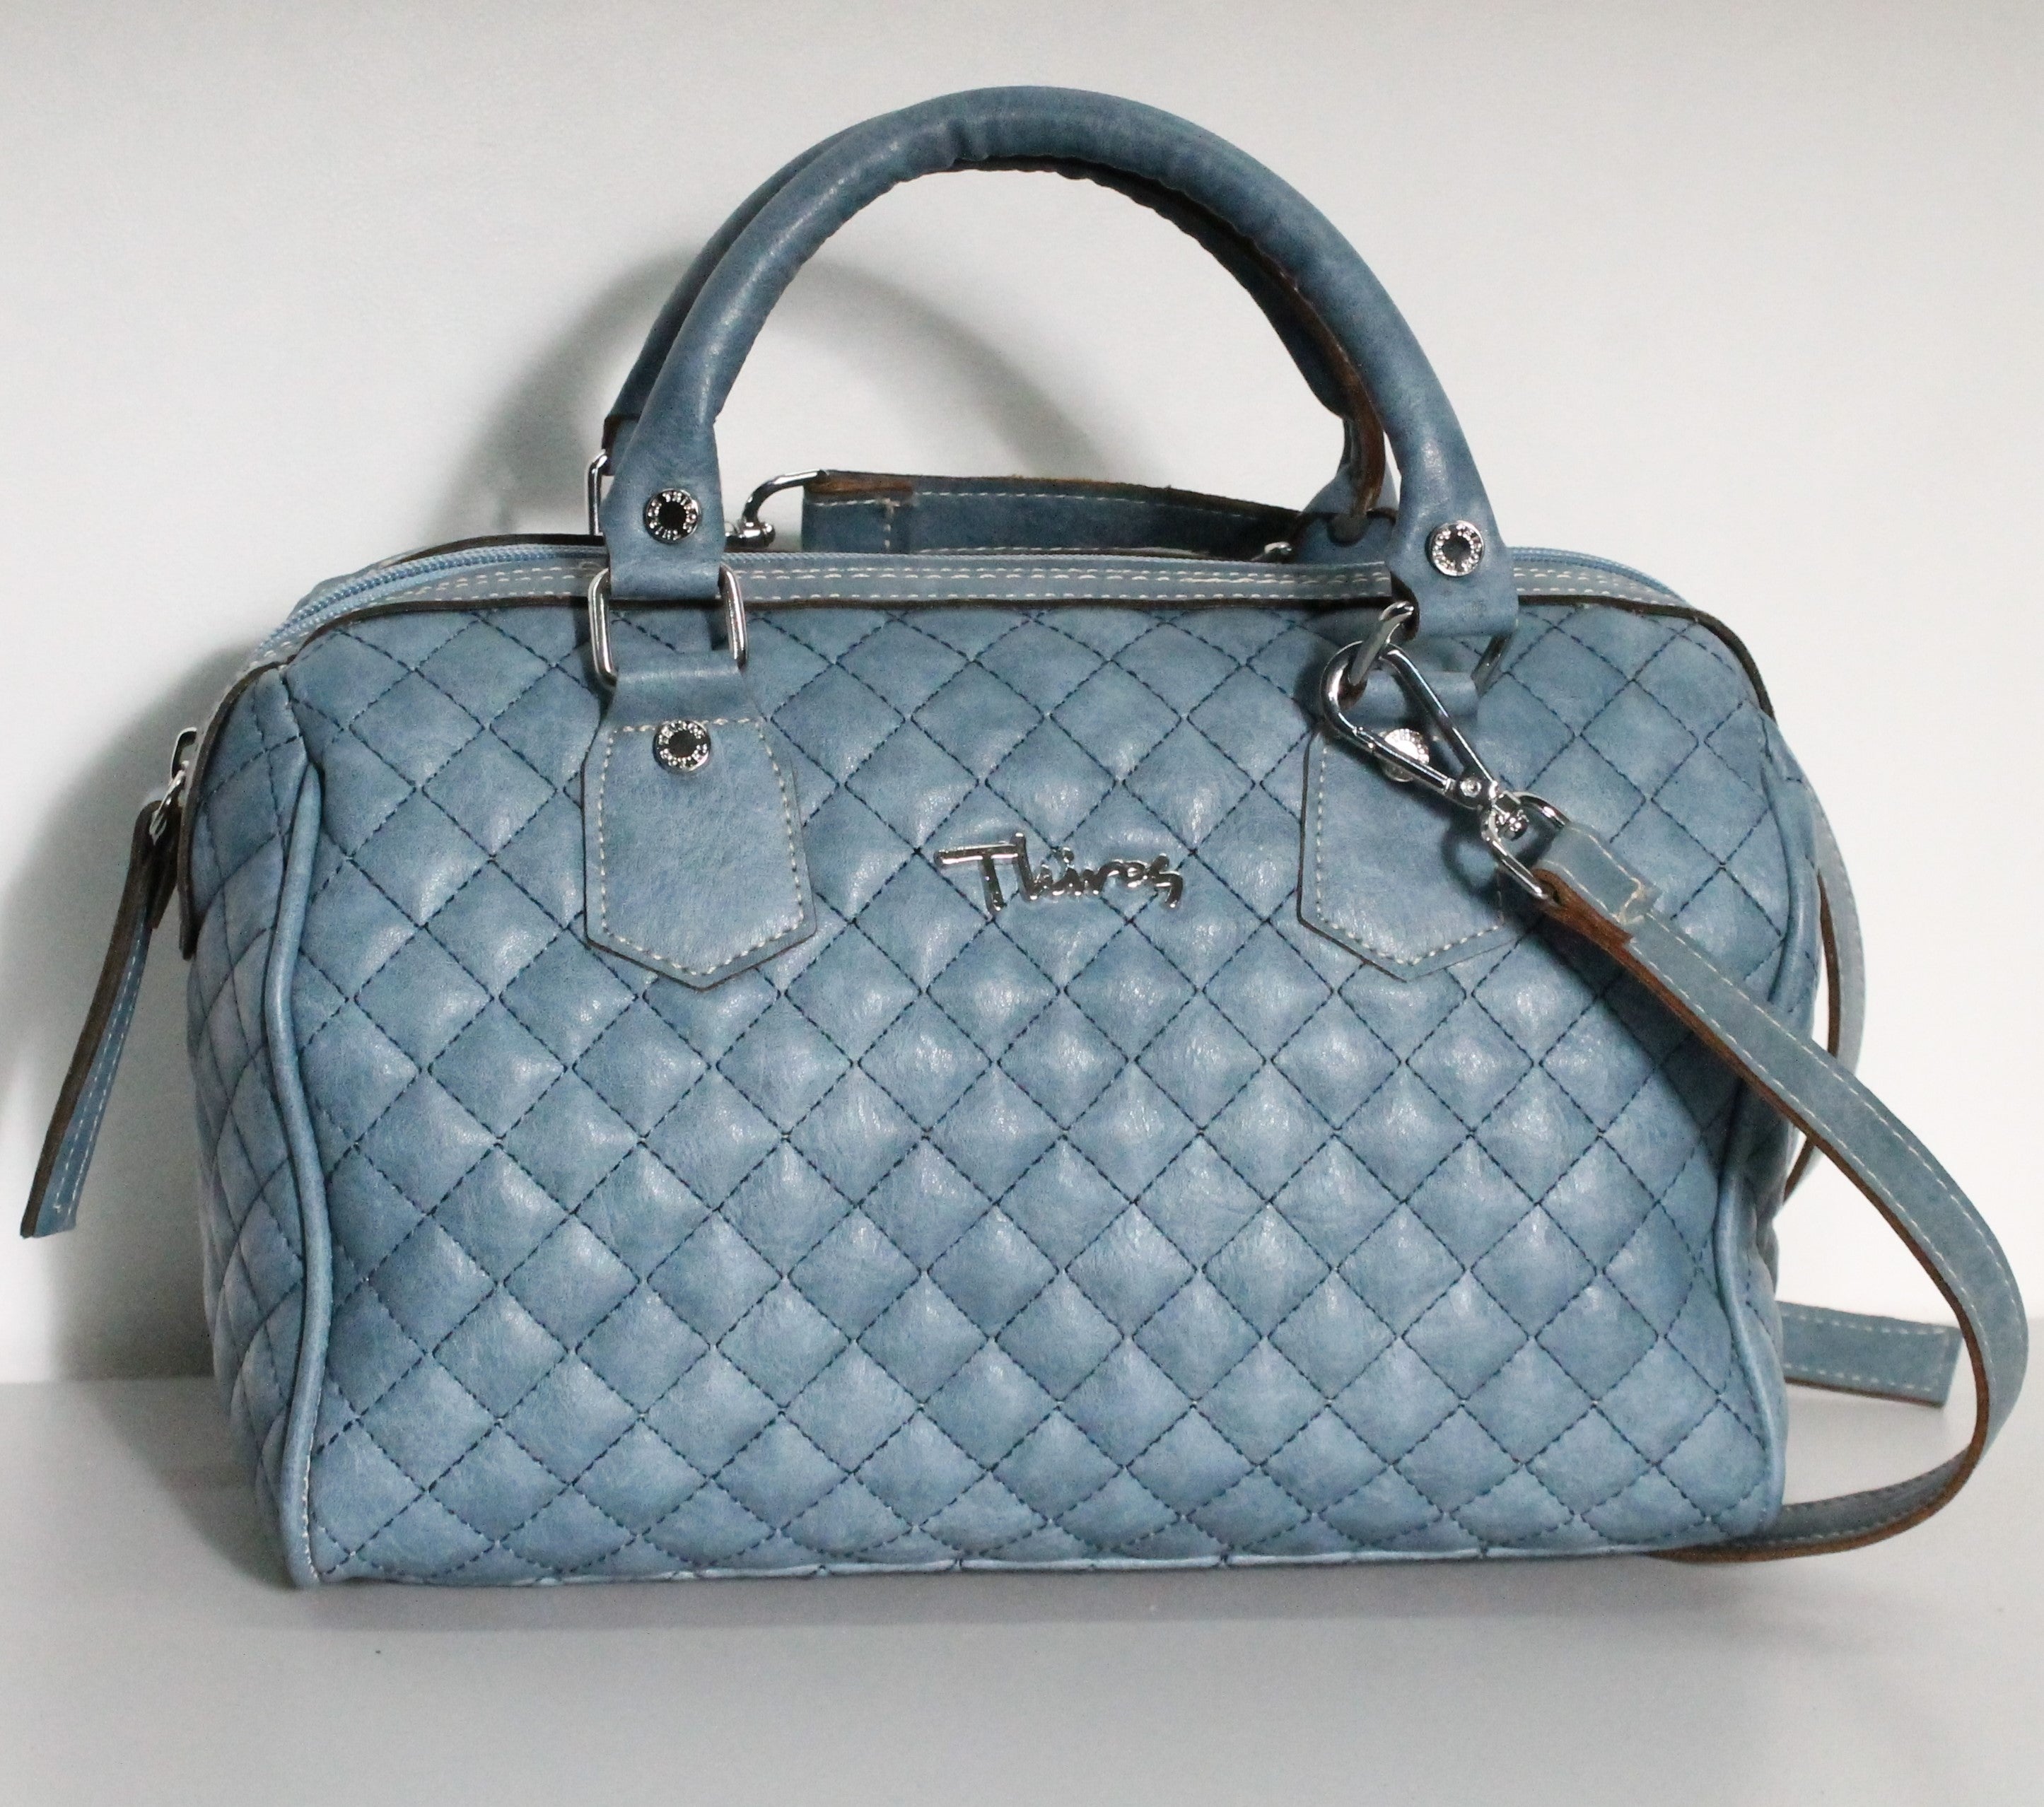 Glam quilted strap handbag